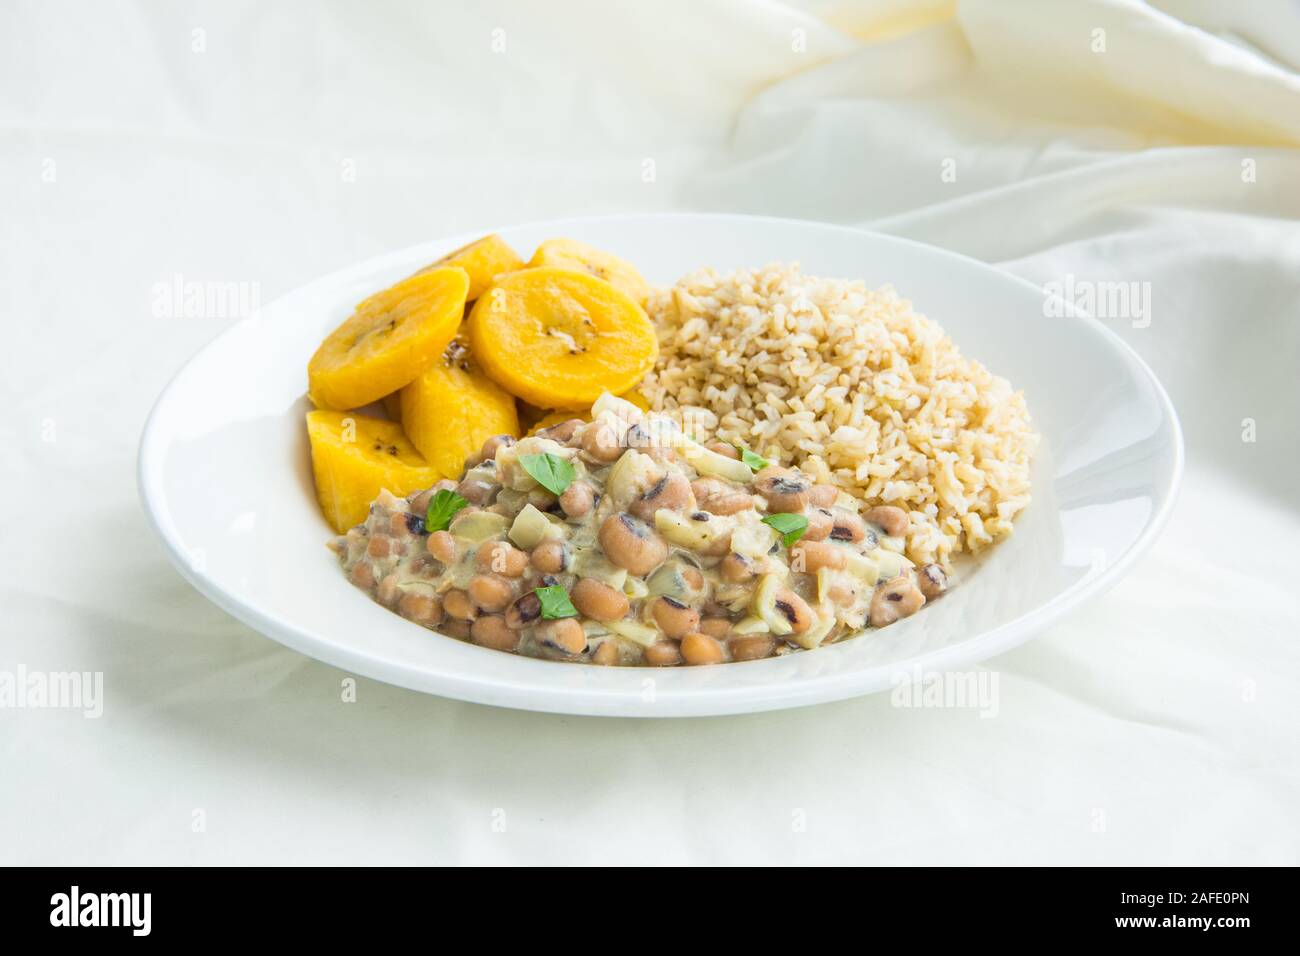 Vegan African cuisine plant based food Stock Photo